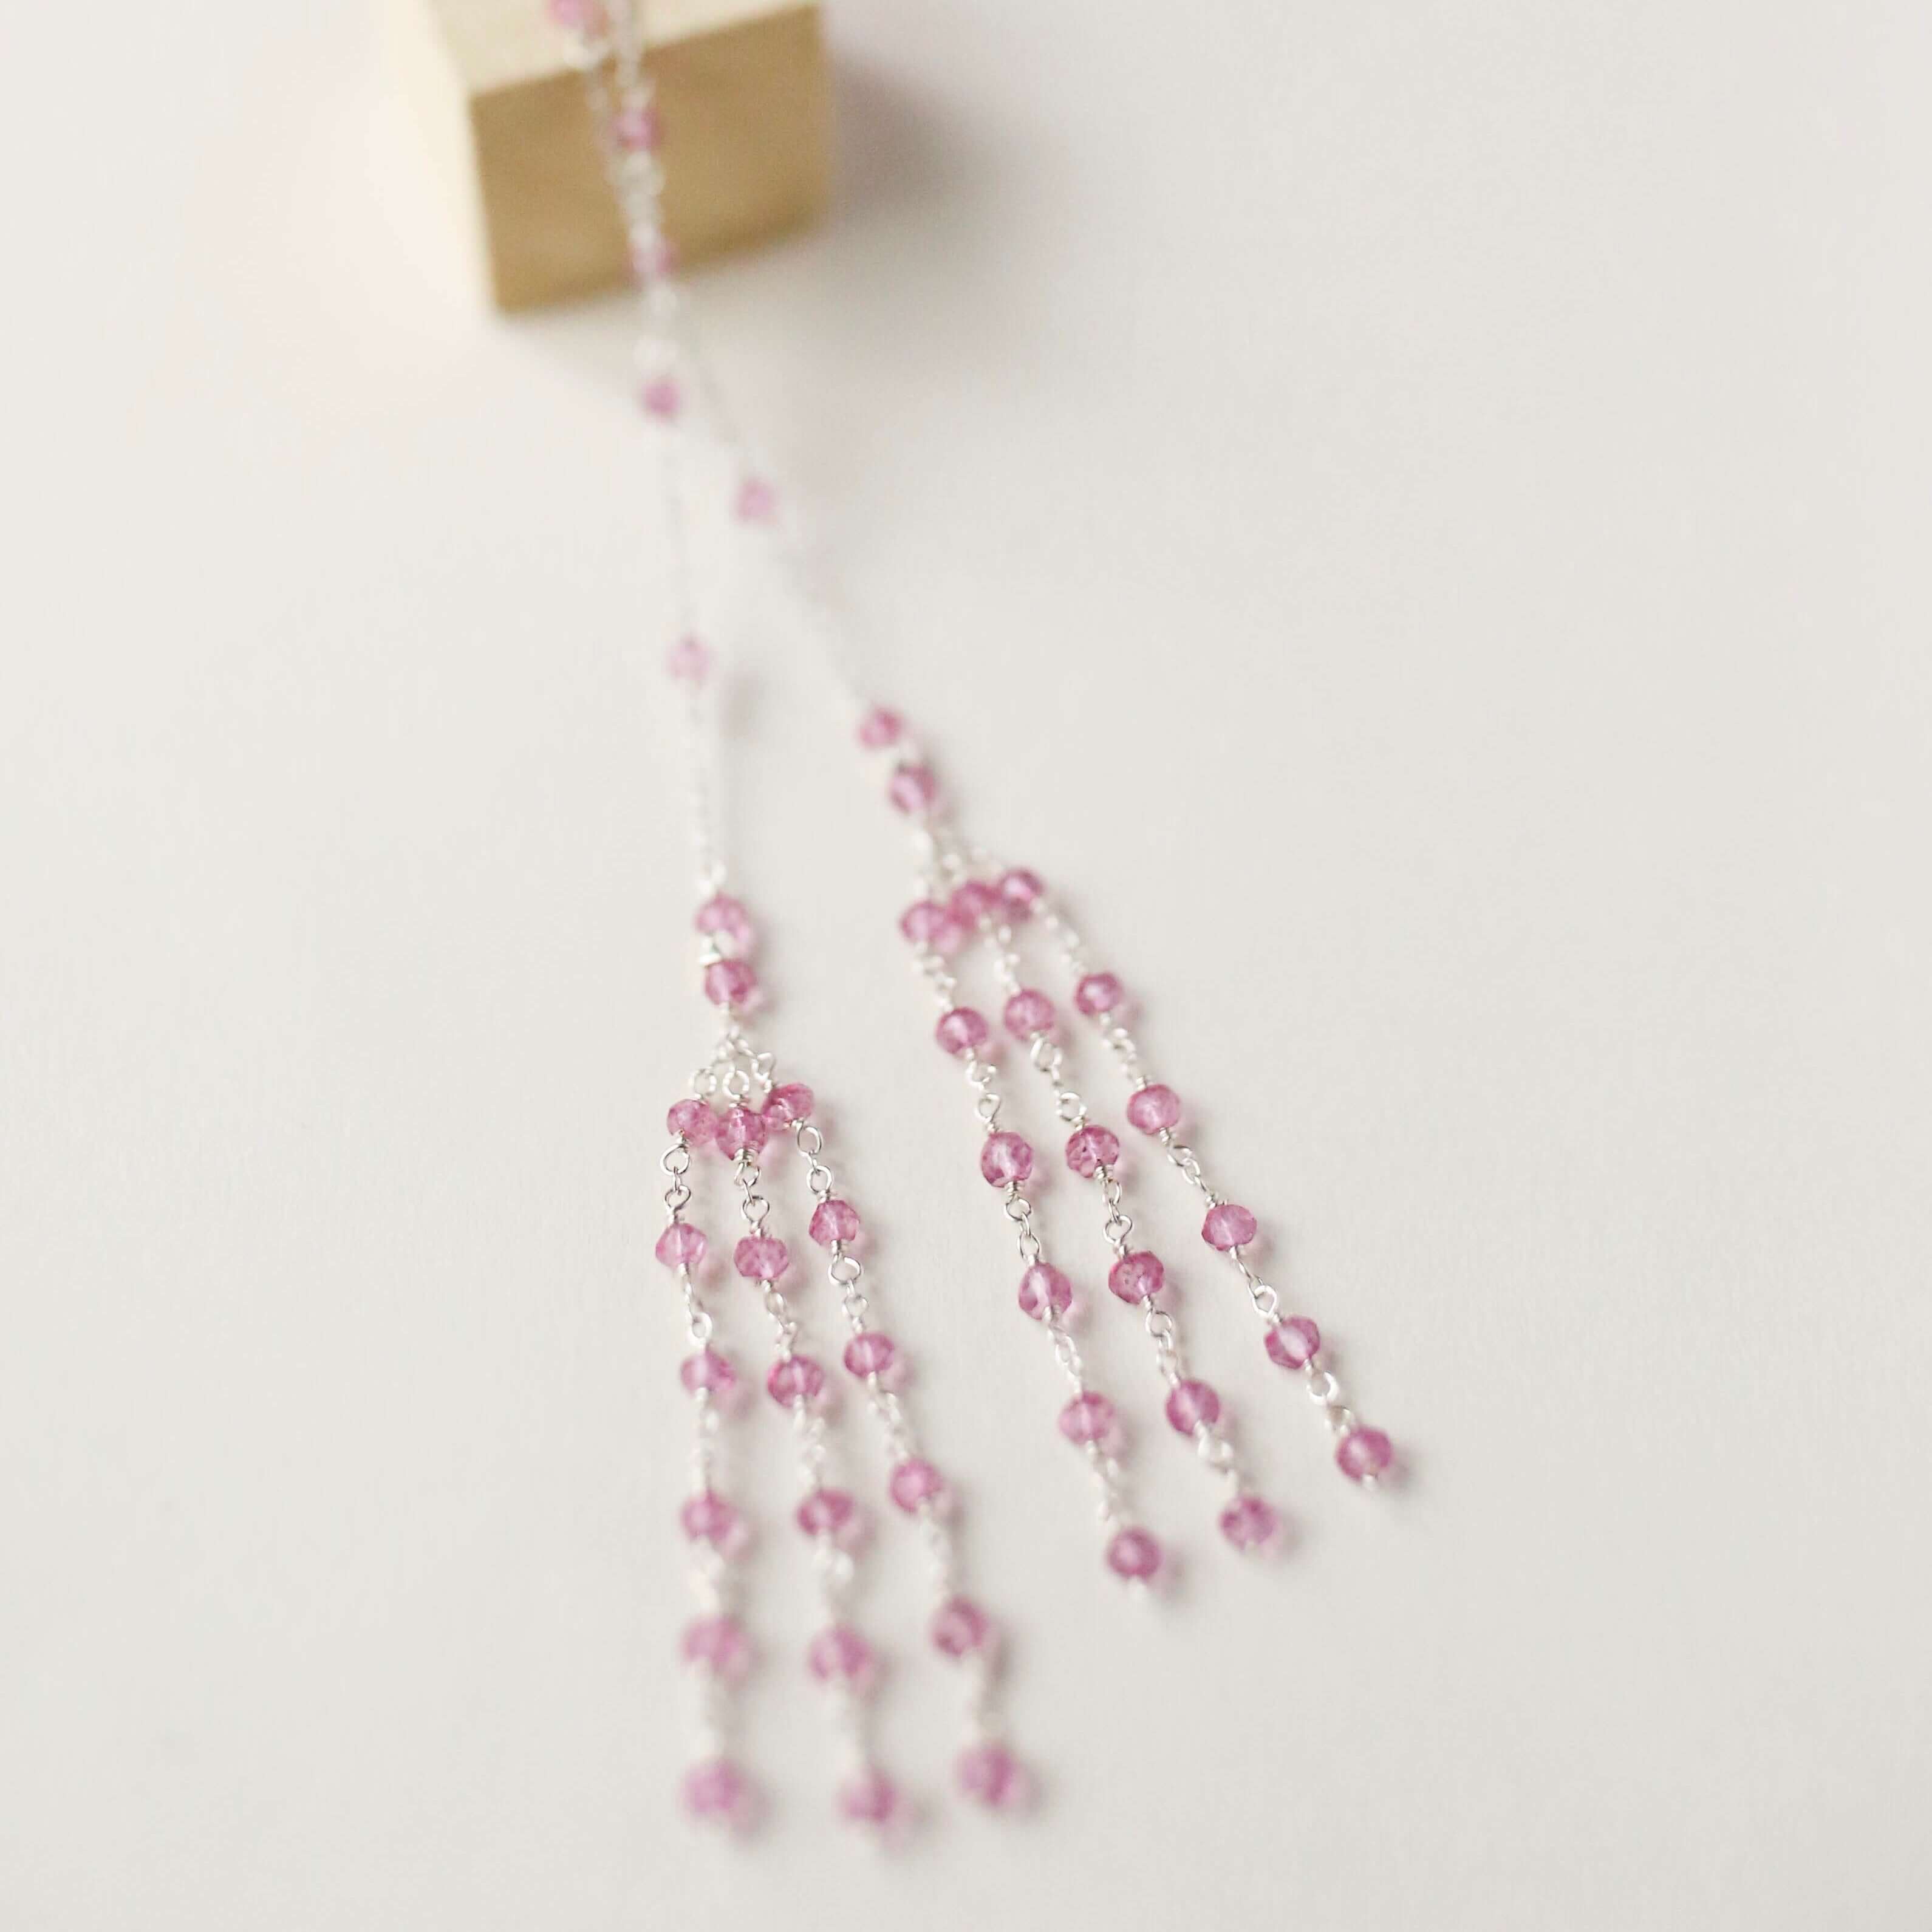 Gold Ballet Lariat Necklace in Pink Tourmaline